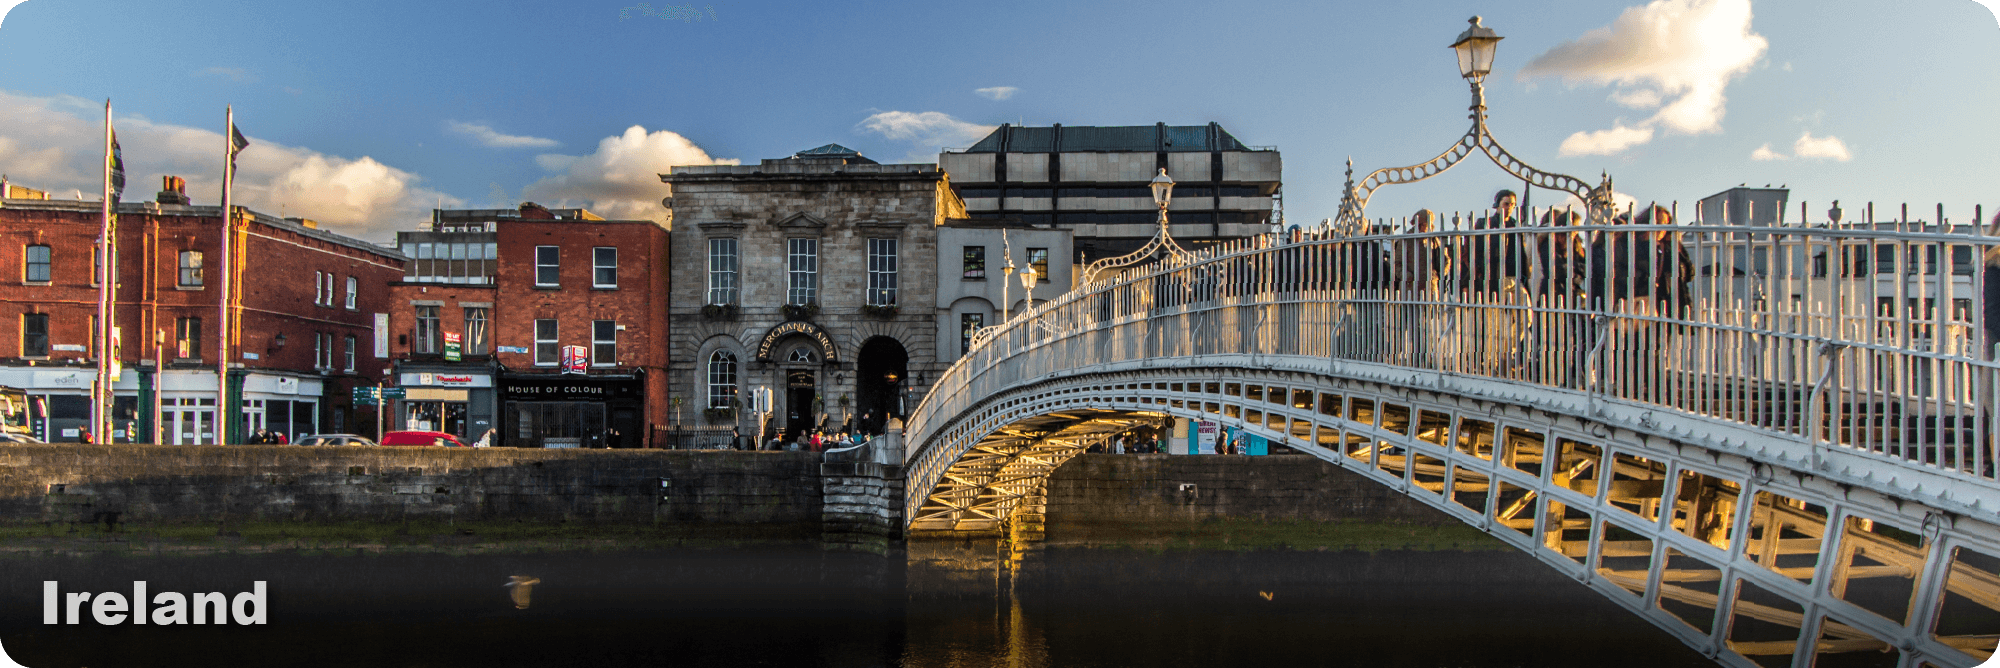 an image of a bridge in Ireland